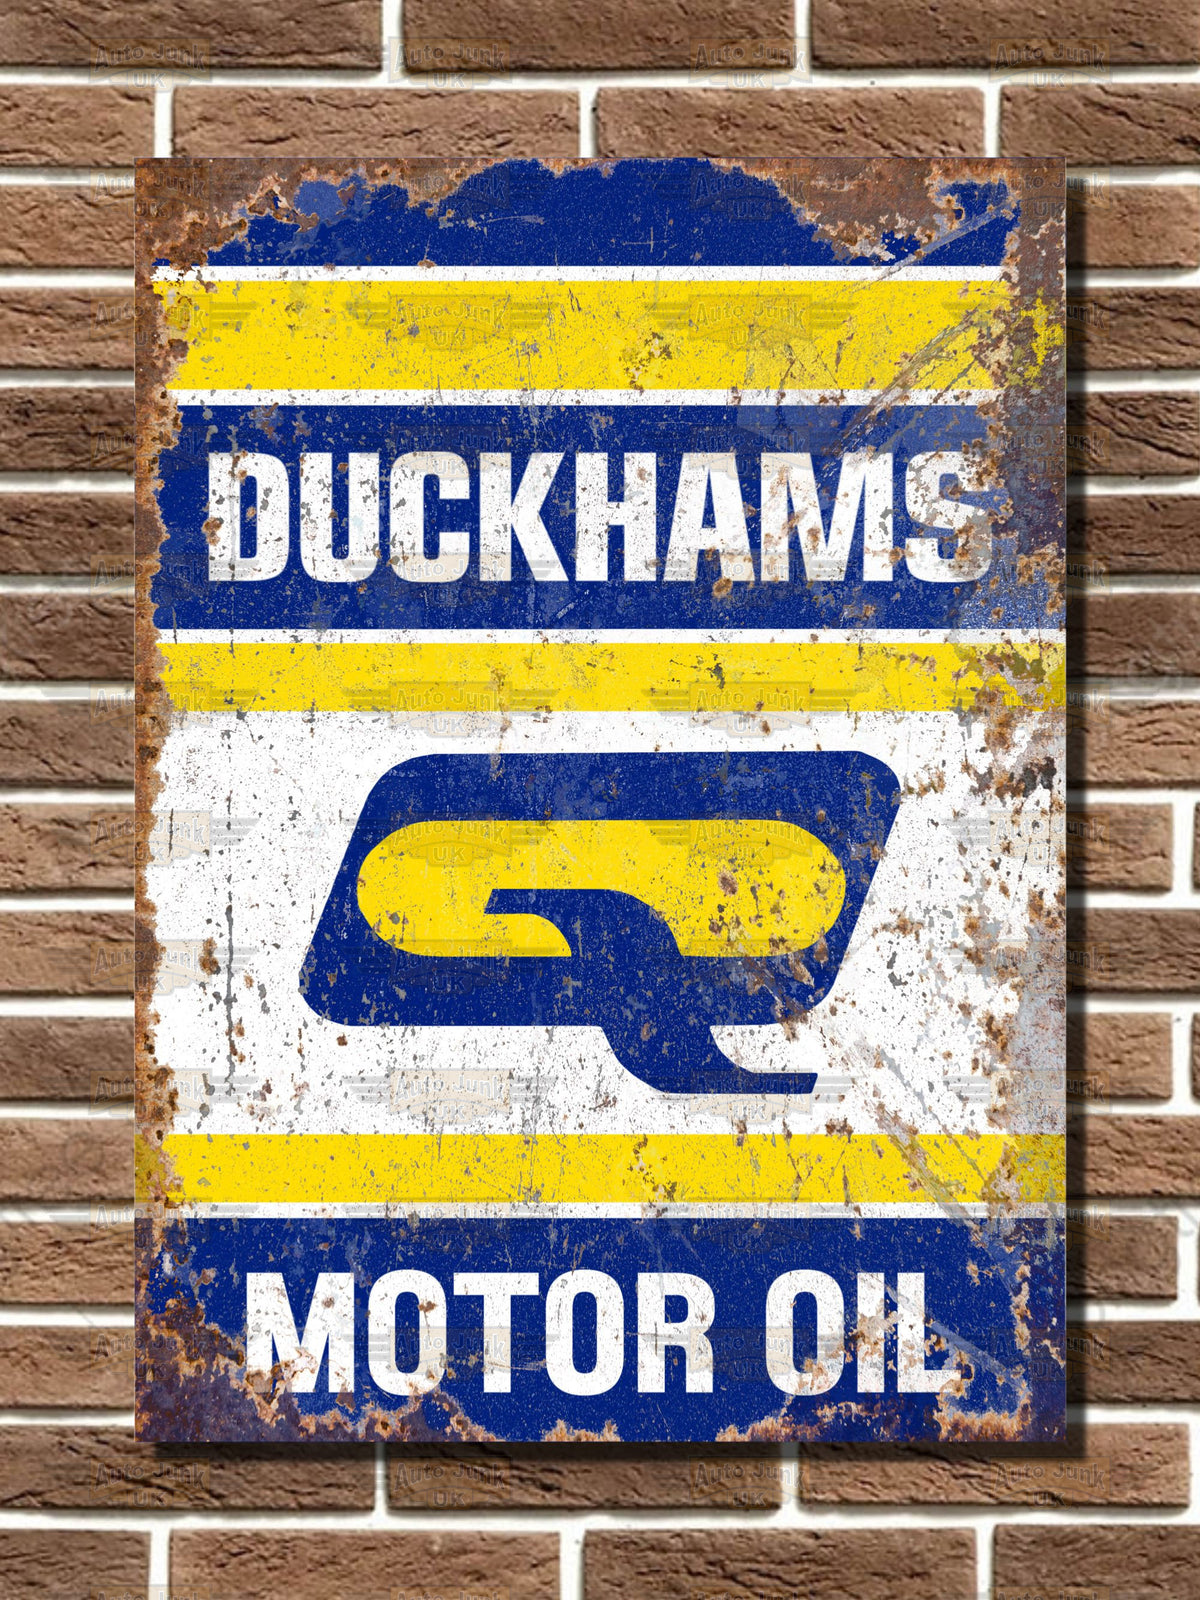 Duckhams Motor Oil Metal Sign